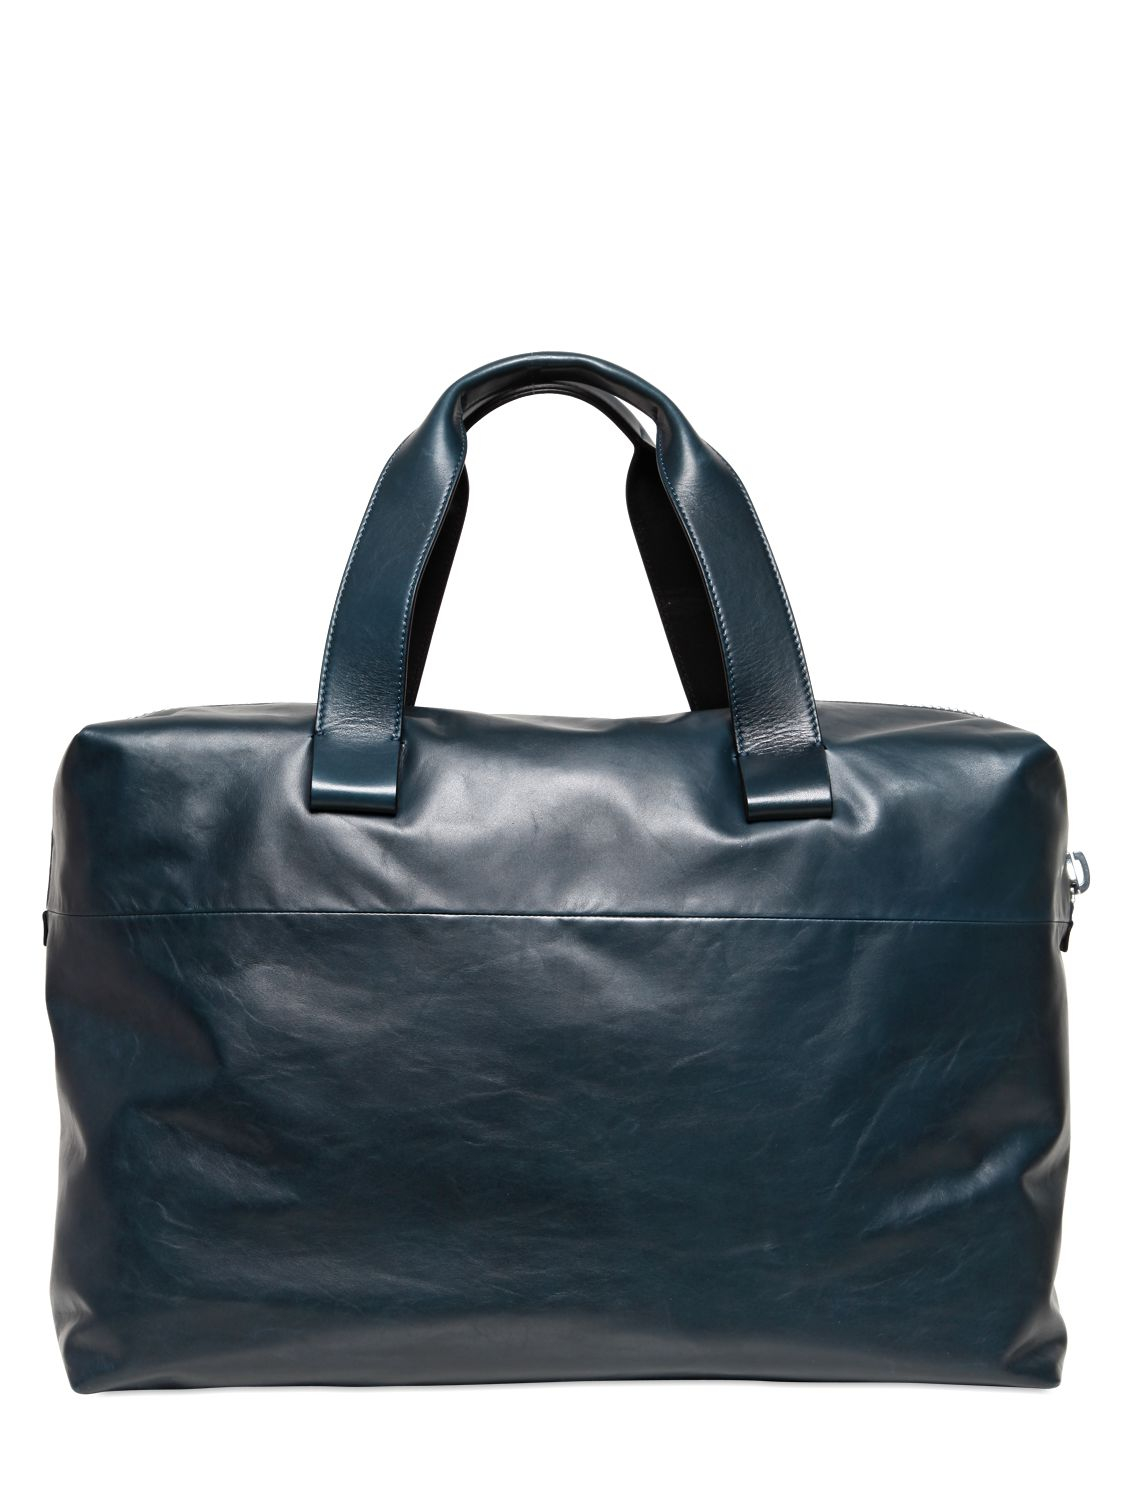 Lanvin Paper Effect Leather Bag in Blue for Men - Lyst